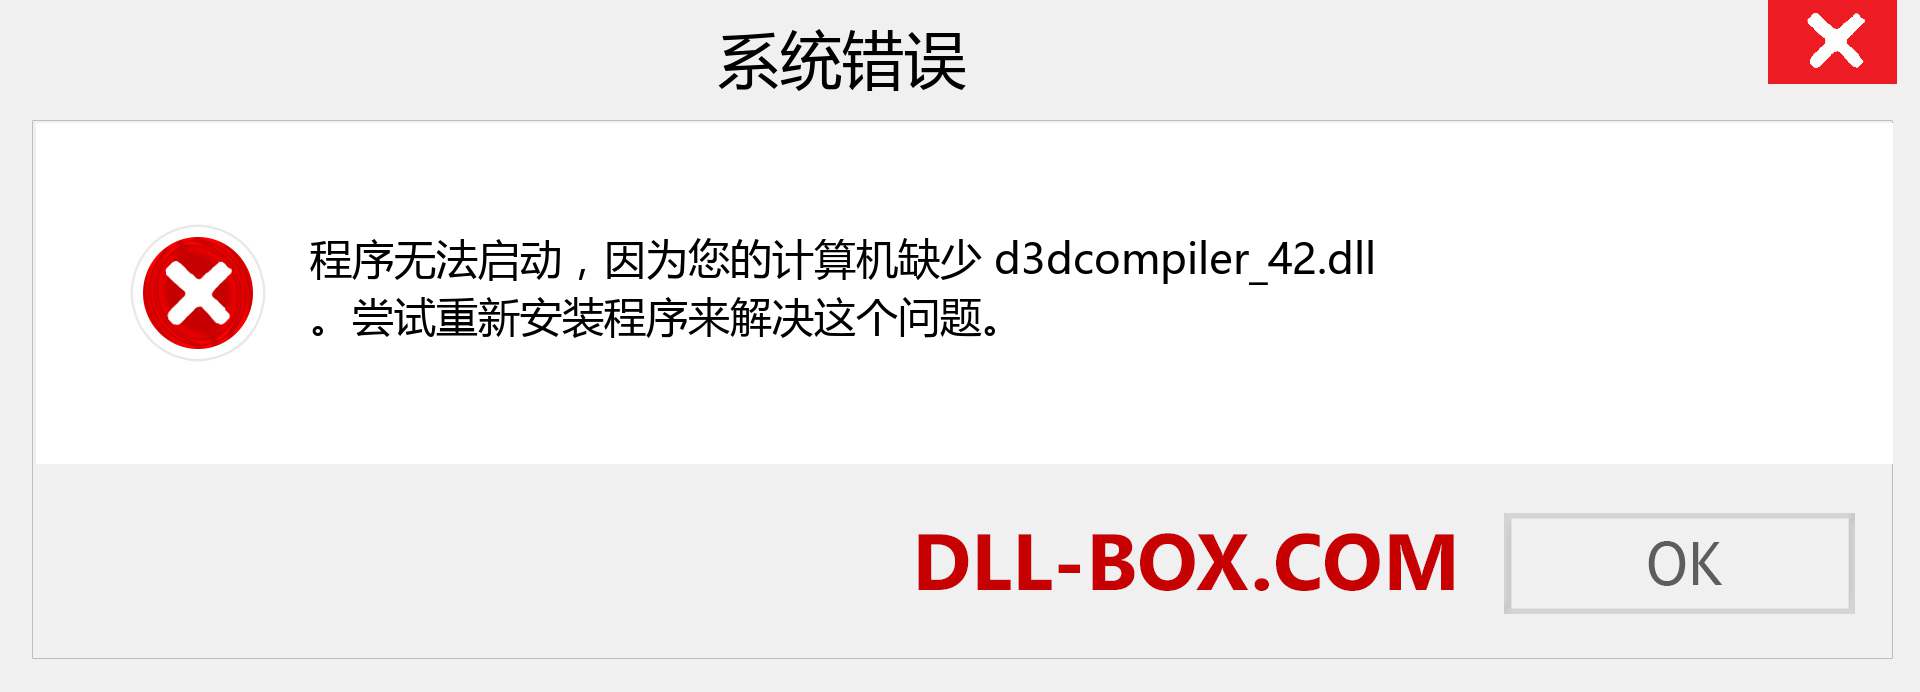 d3dcompiler_42.dll 文件丢失？。 适用于 Windows 7、8、10 的下载 - 修复 Windows、照片、图像上的 d3dcompiler_42 dll 丢失错误